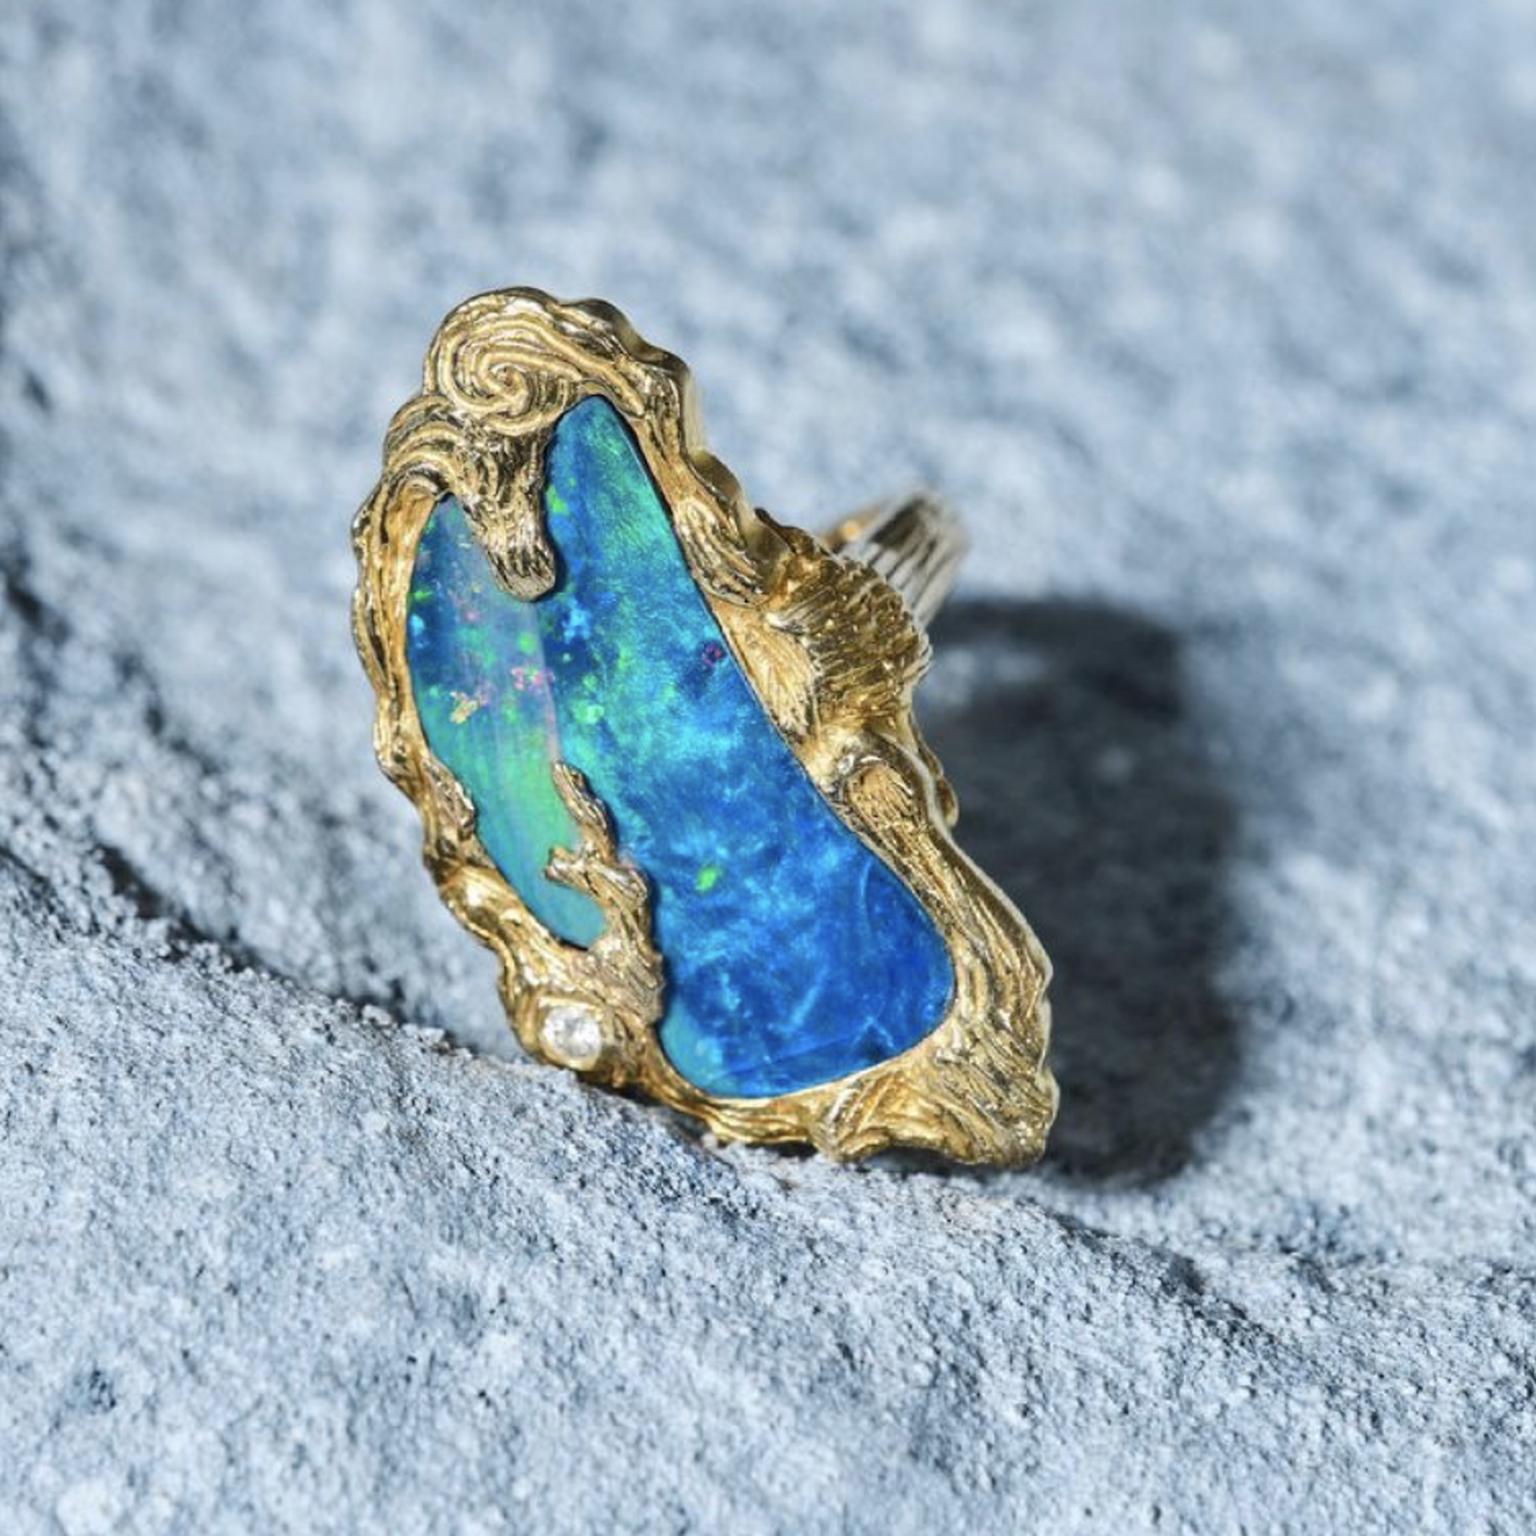 Opal ring by Ray Salenteya